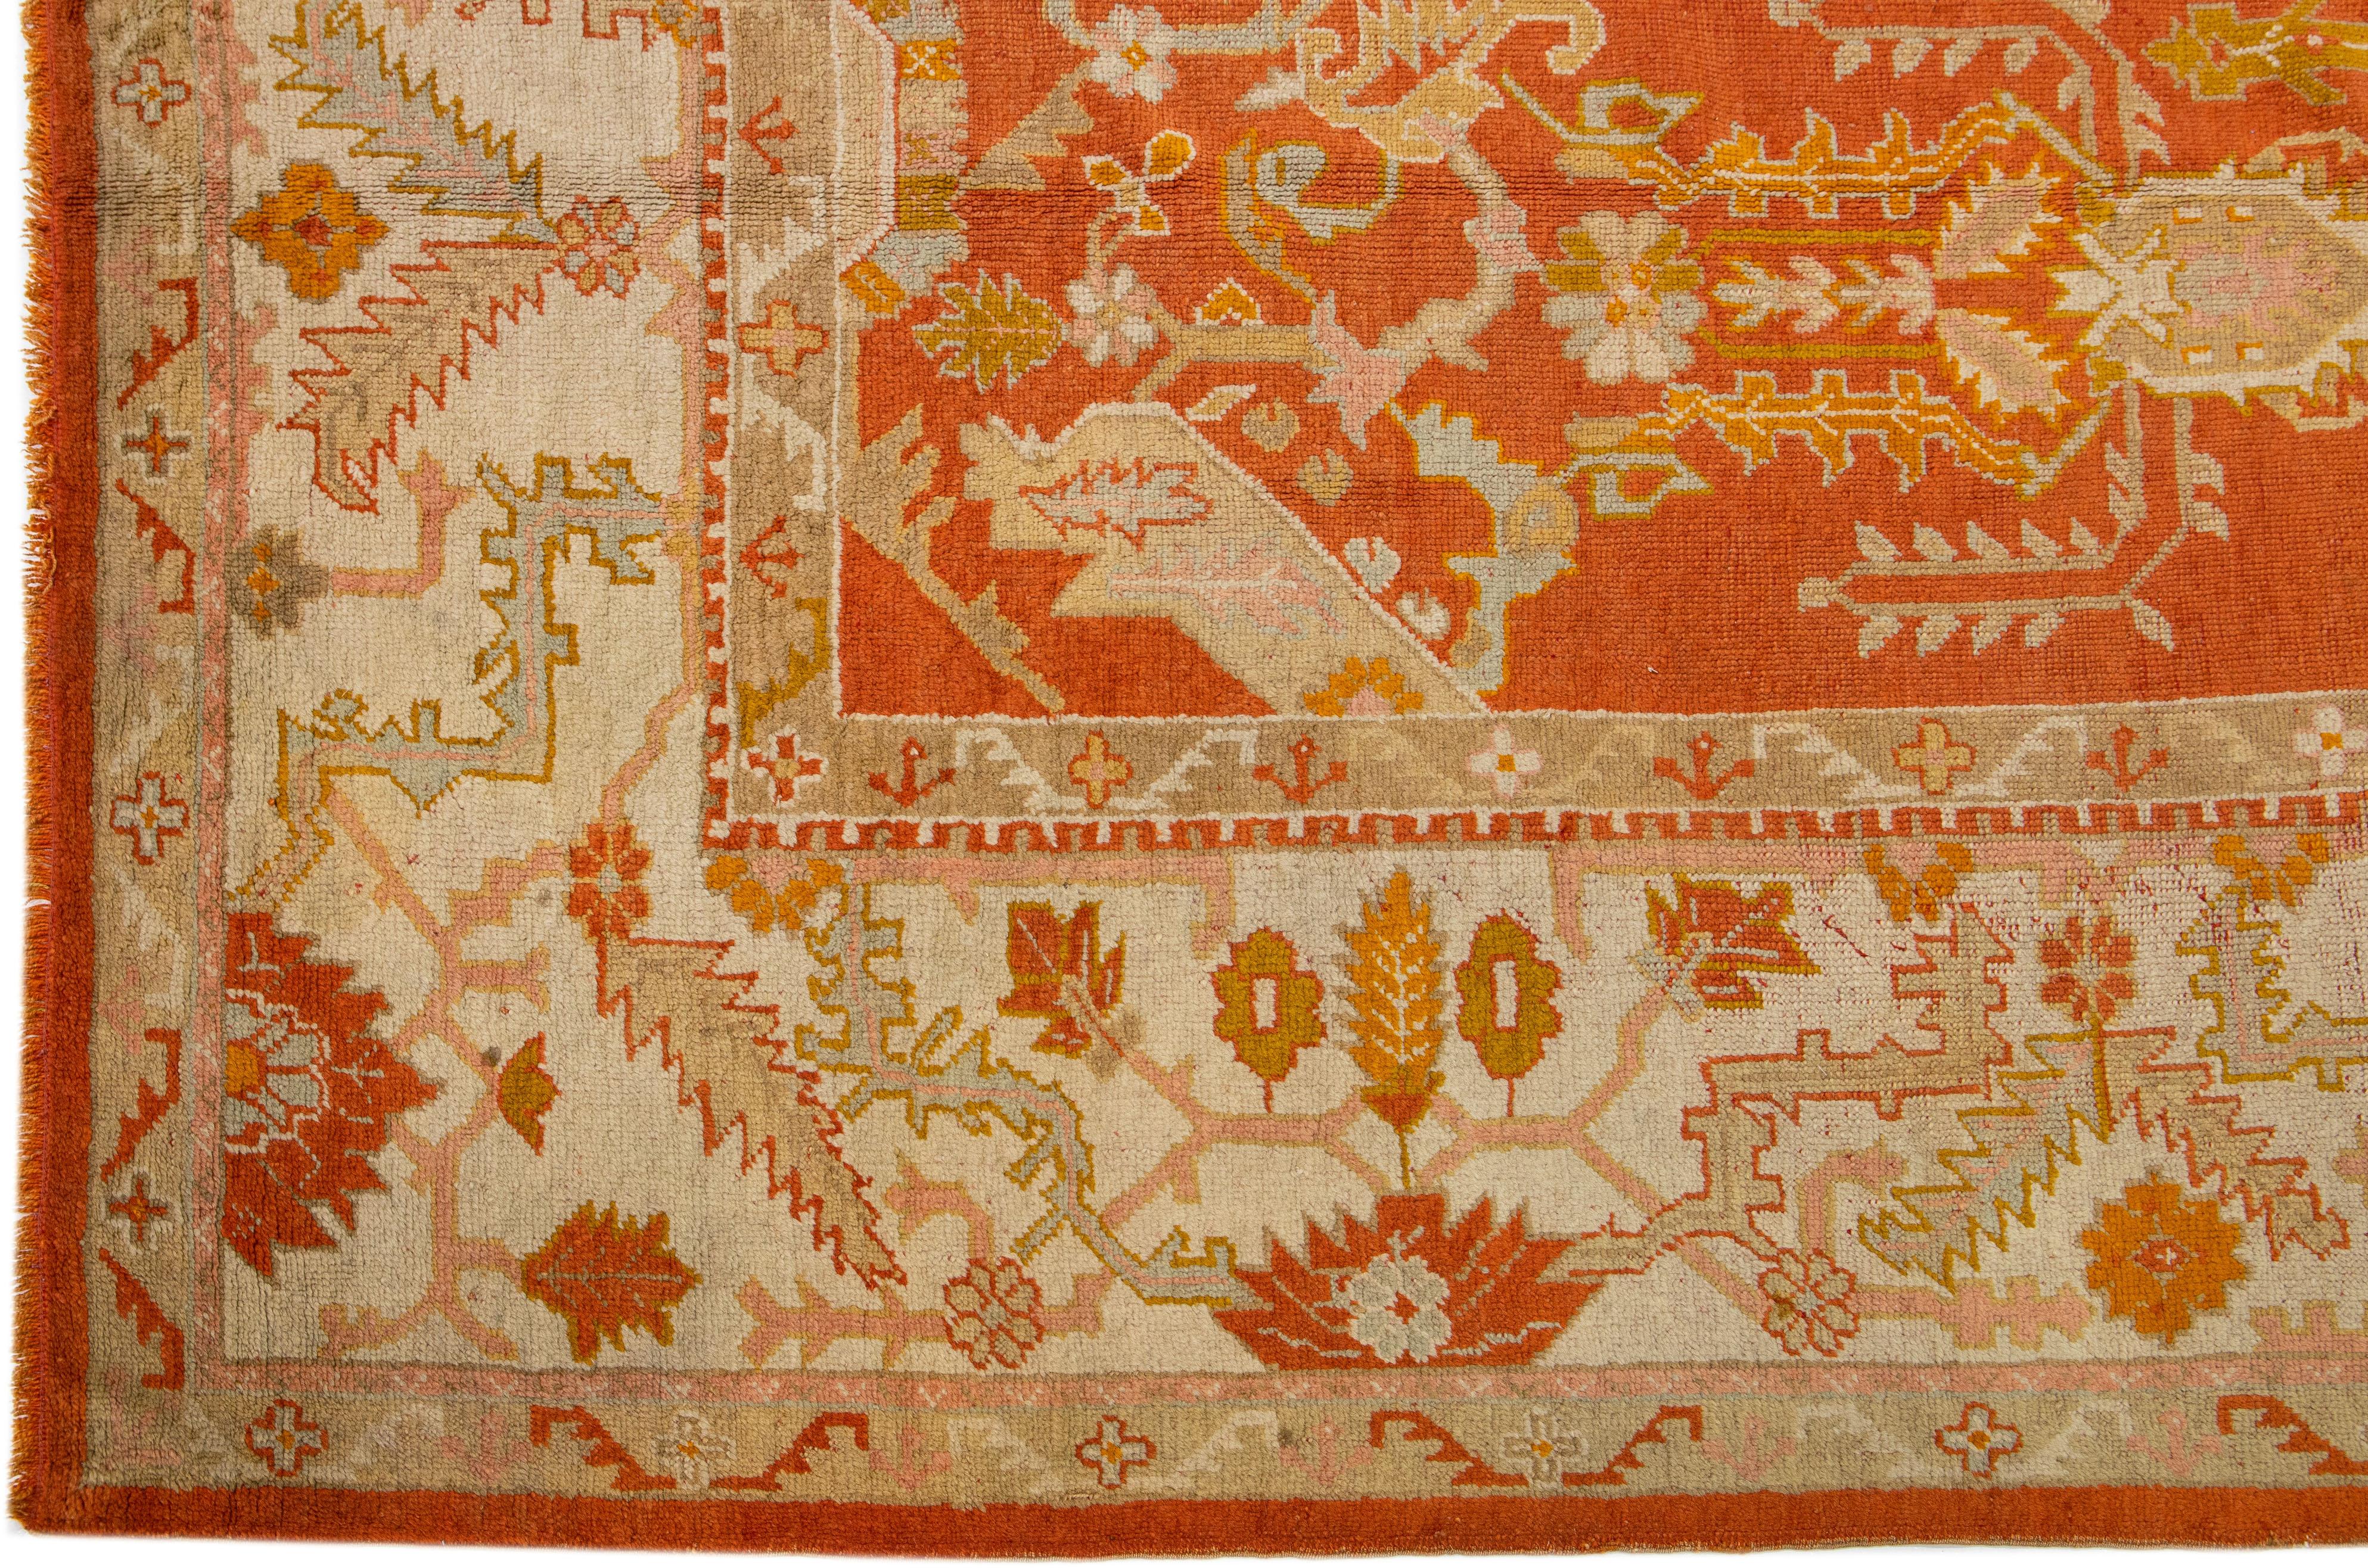 19th Century Orange Antique Turkish Oushak Wool Rug Handmade With Medallion Design For Sale